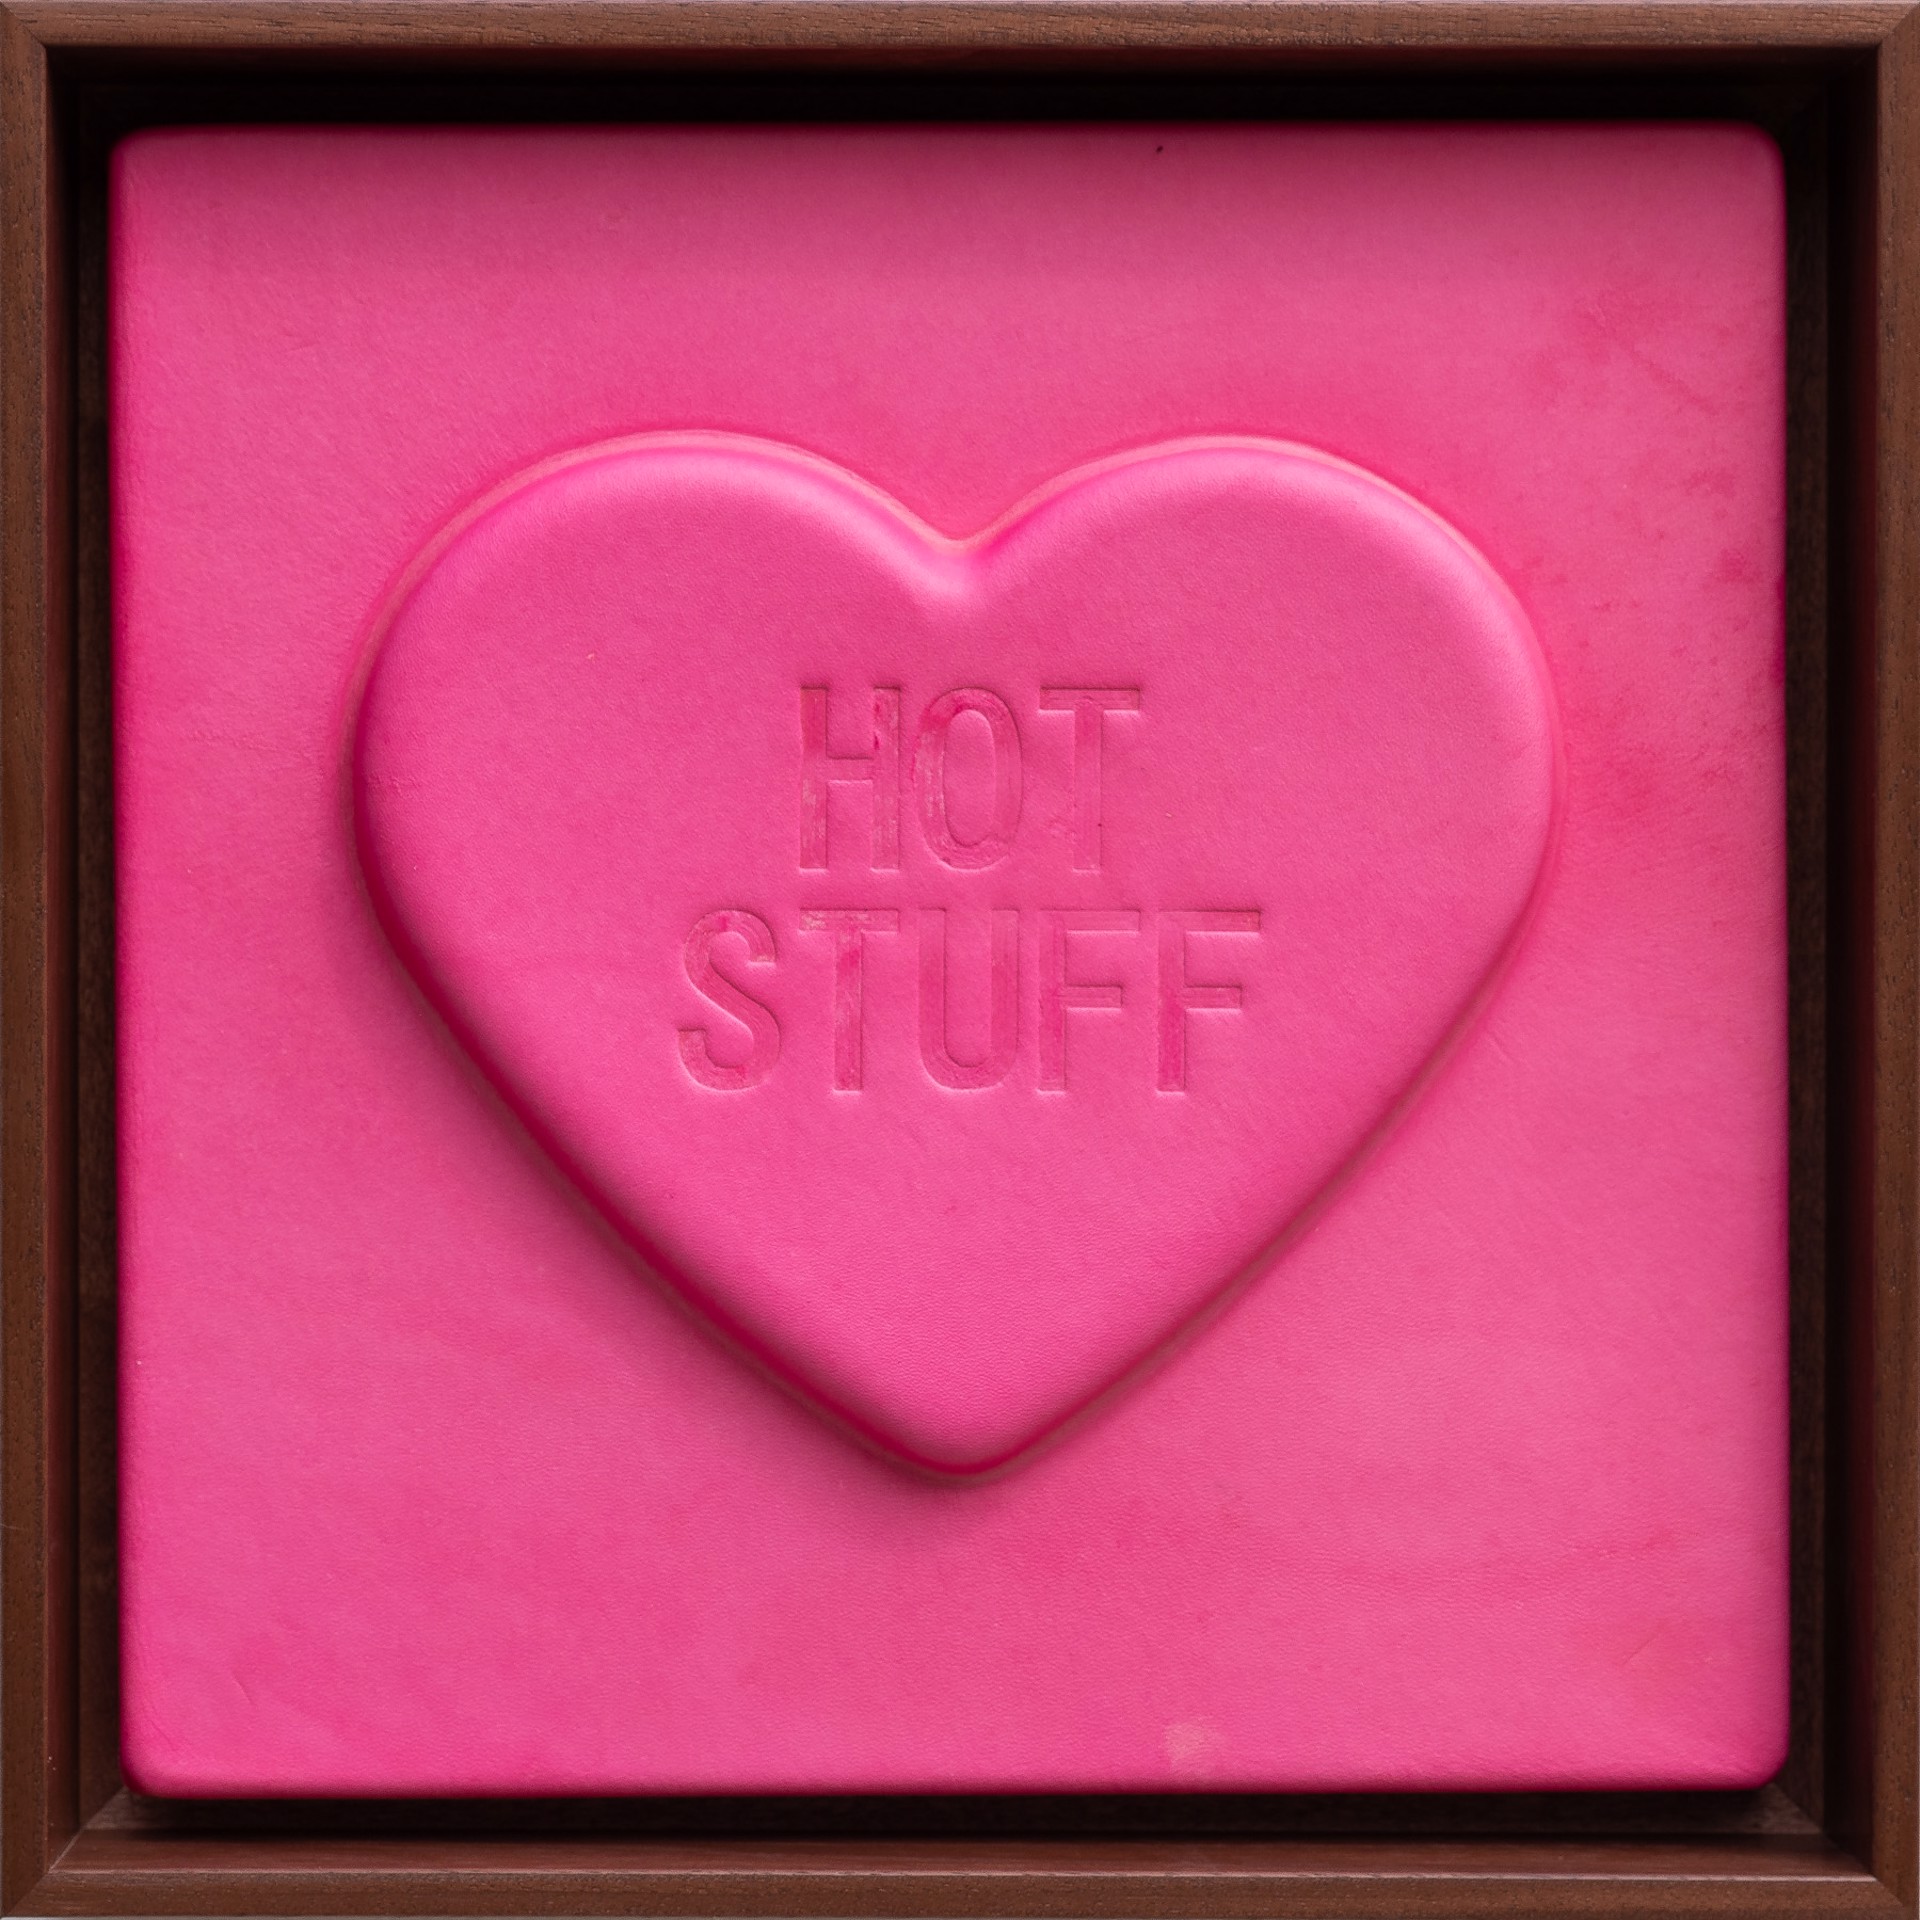 'HOT STUFF' -  Sweetheart series by Mx. Hyde